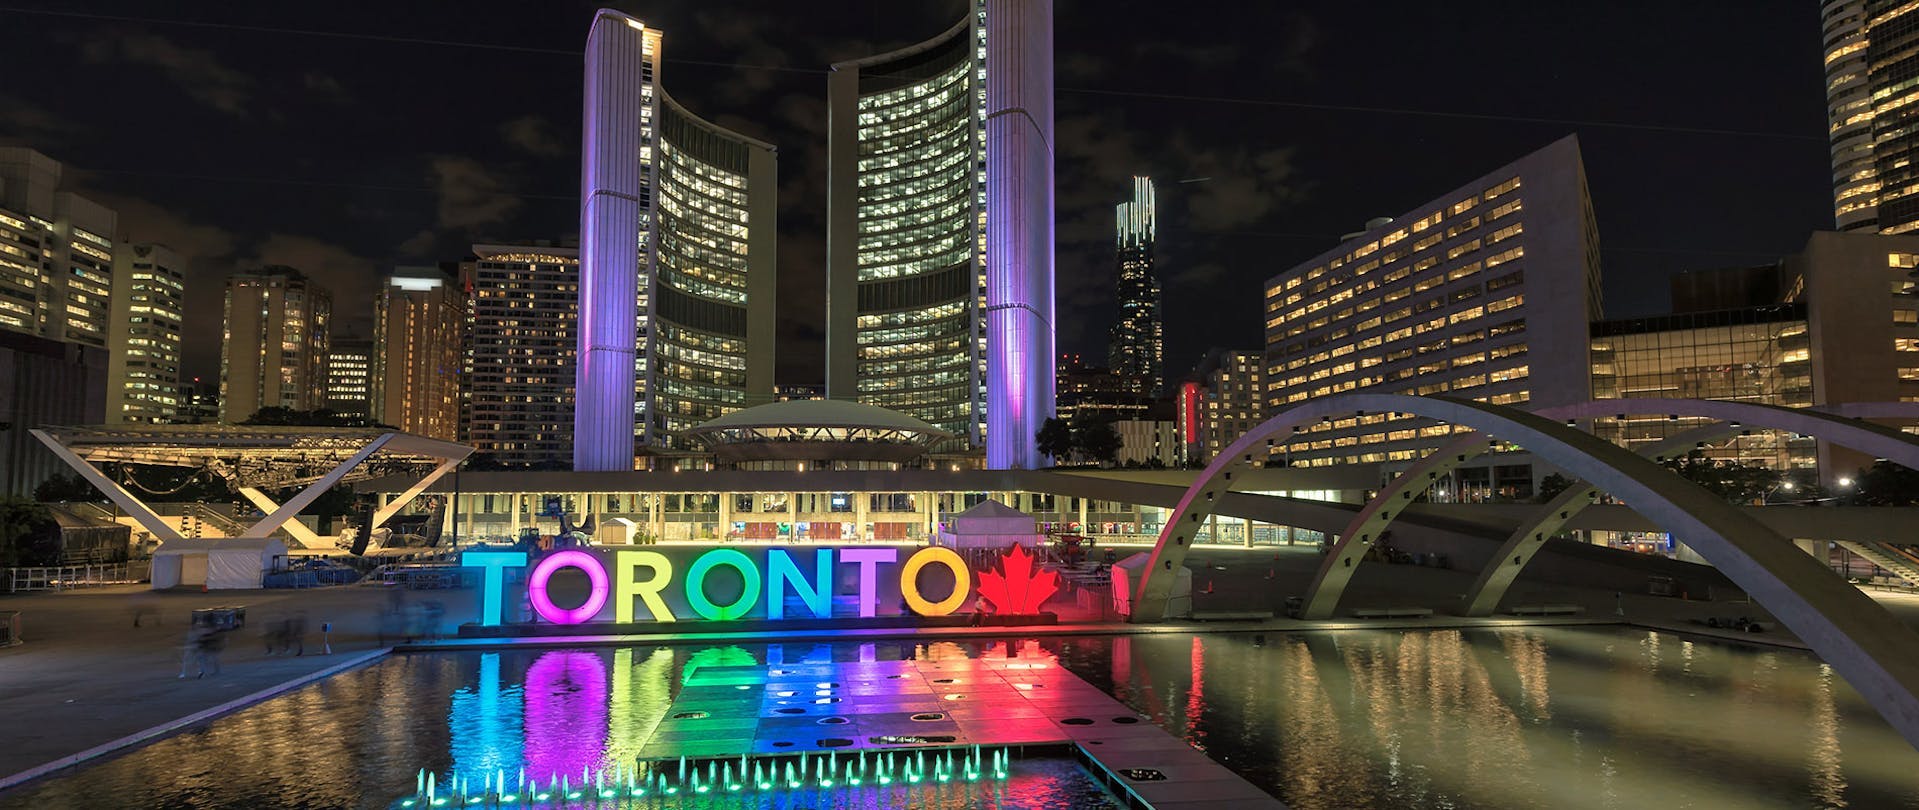 Toronto Canada City Lights Illustration